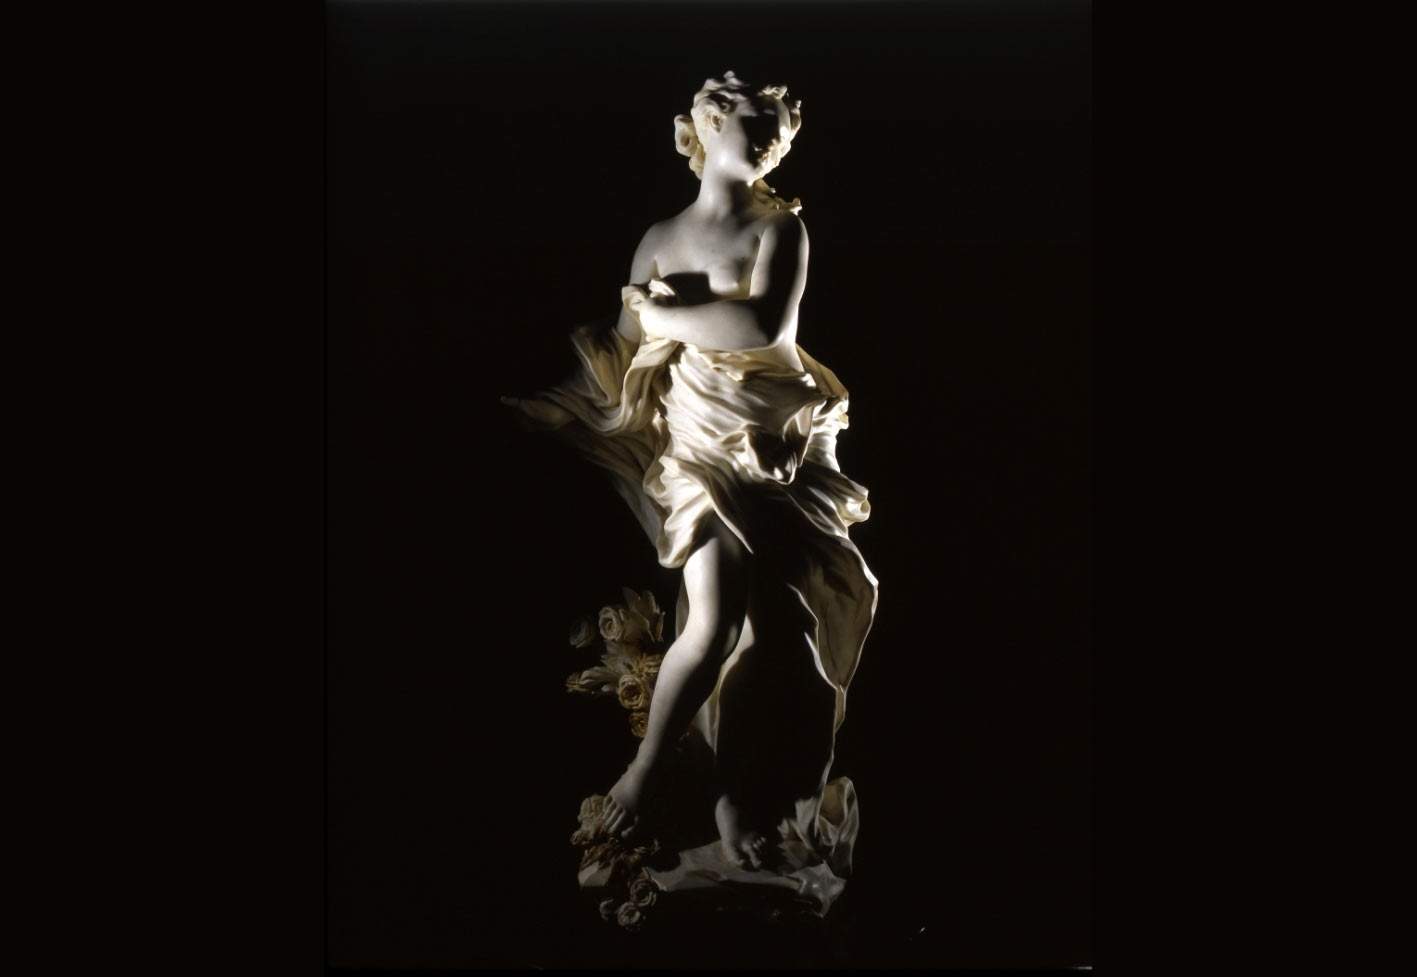 Genoa, a new exhibit at Palazzo Reale for Filippo Parodi's Metamorphoses